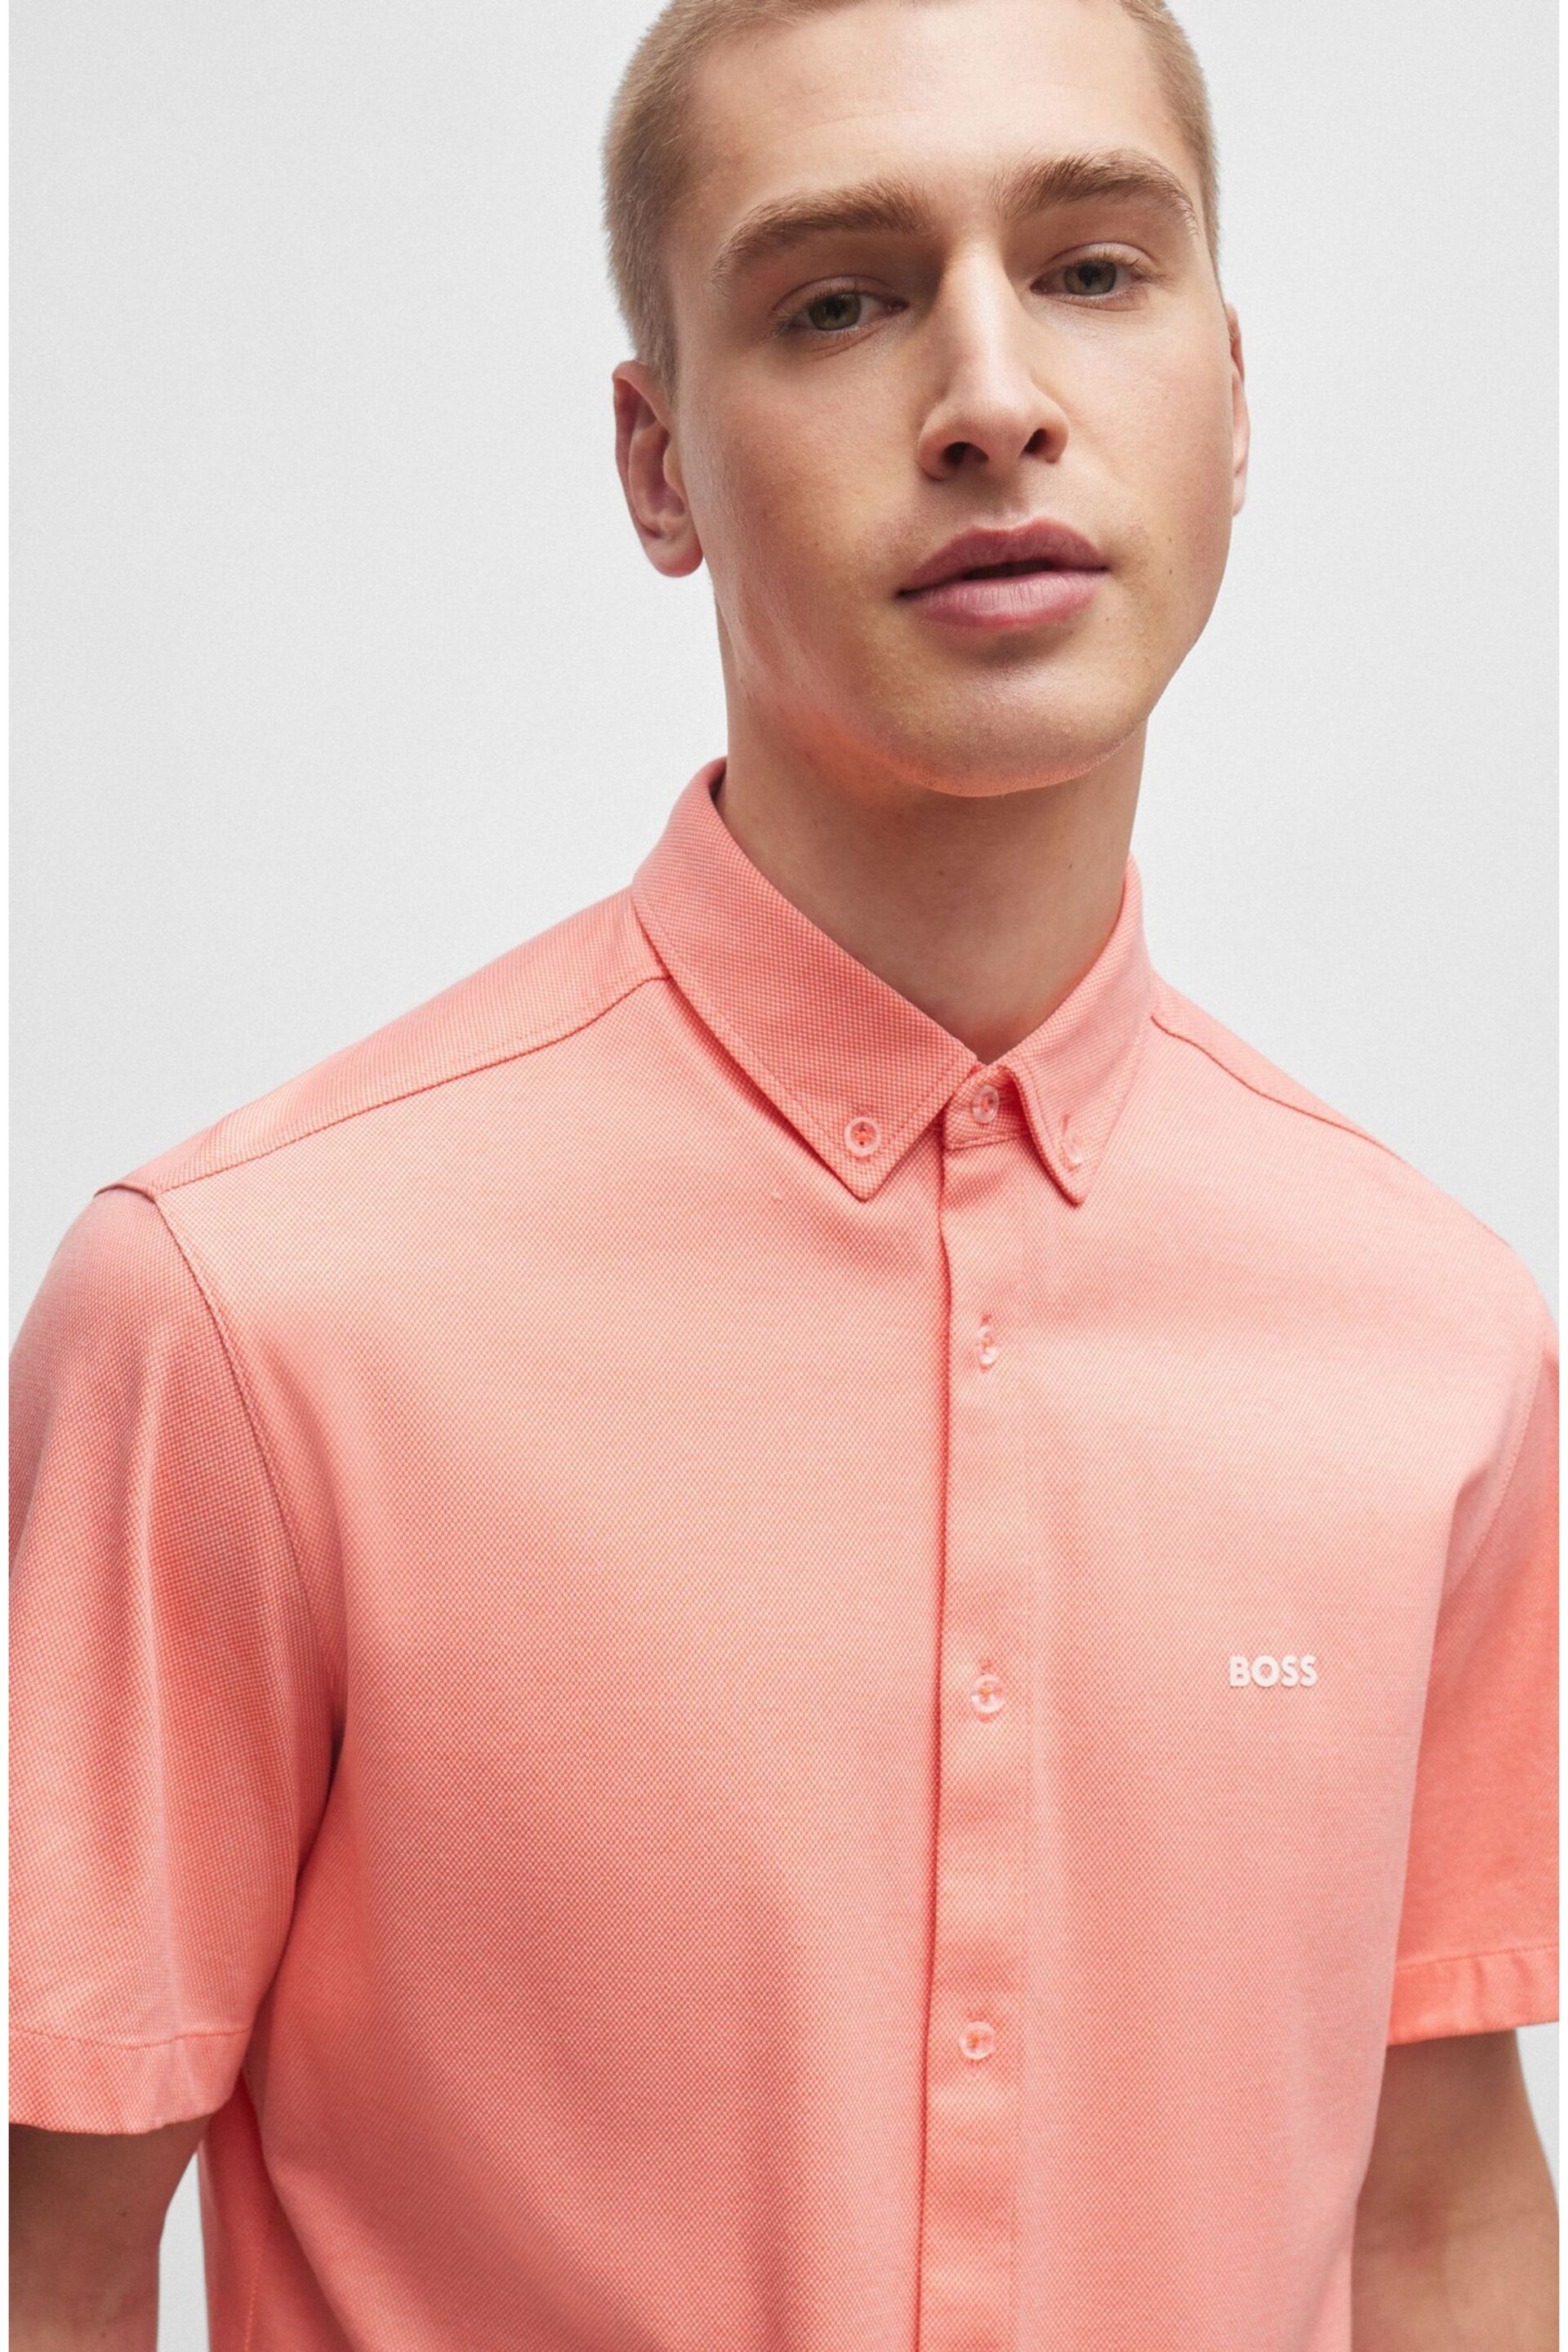 BOSS Pink Regular-Fit Shirt in Cotton Piqué Jersey - Image 5 of 5